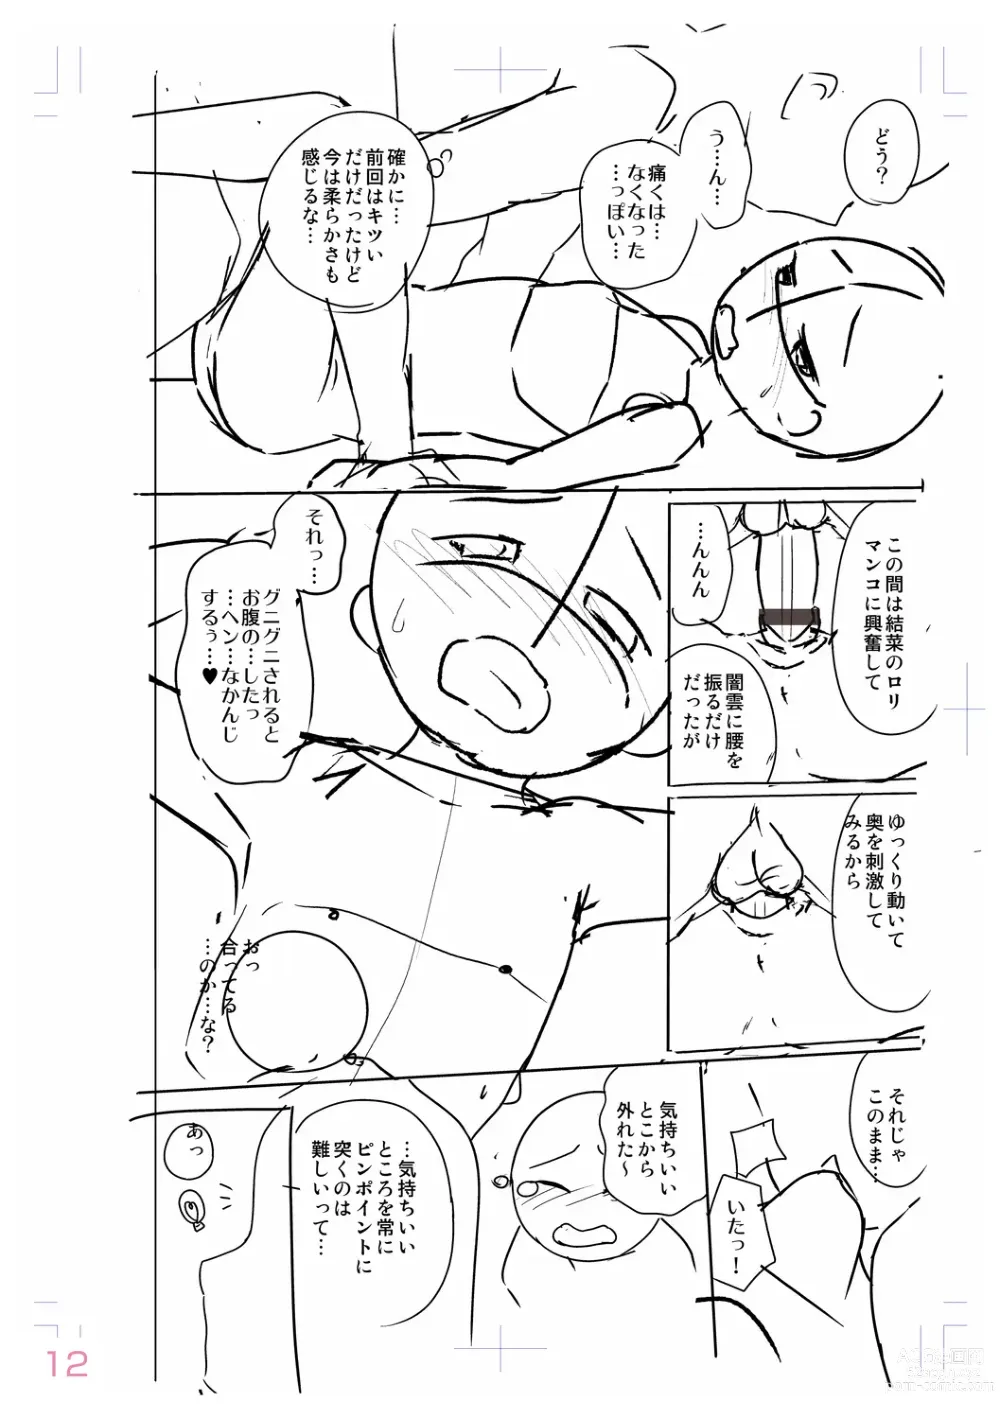 Page 238 of manga Shishunki wa Ichido dake - The one and only adolescence.